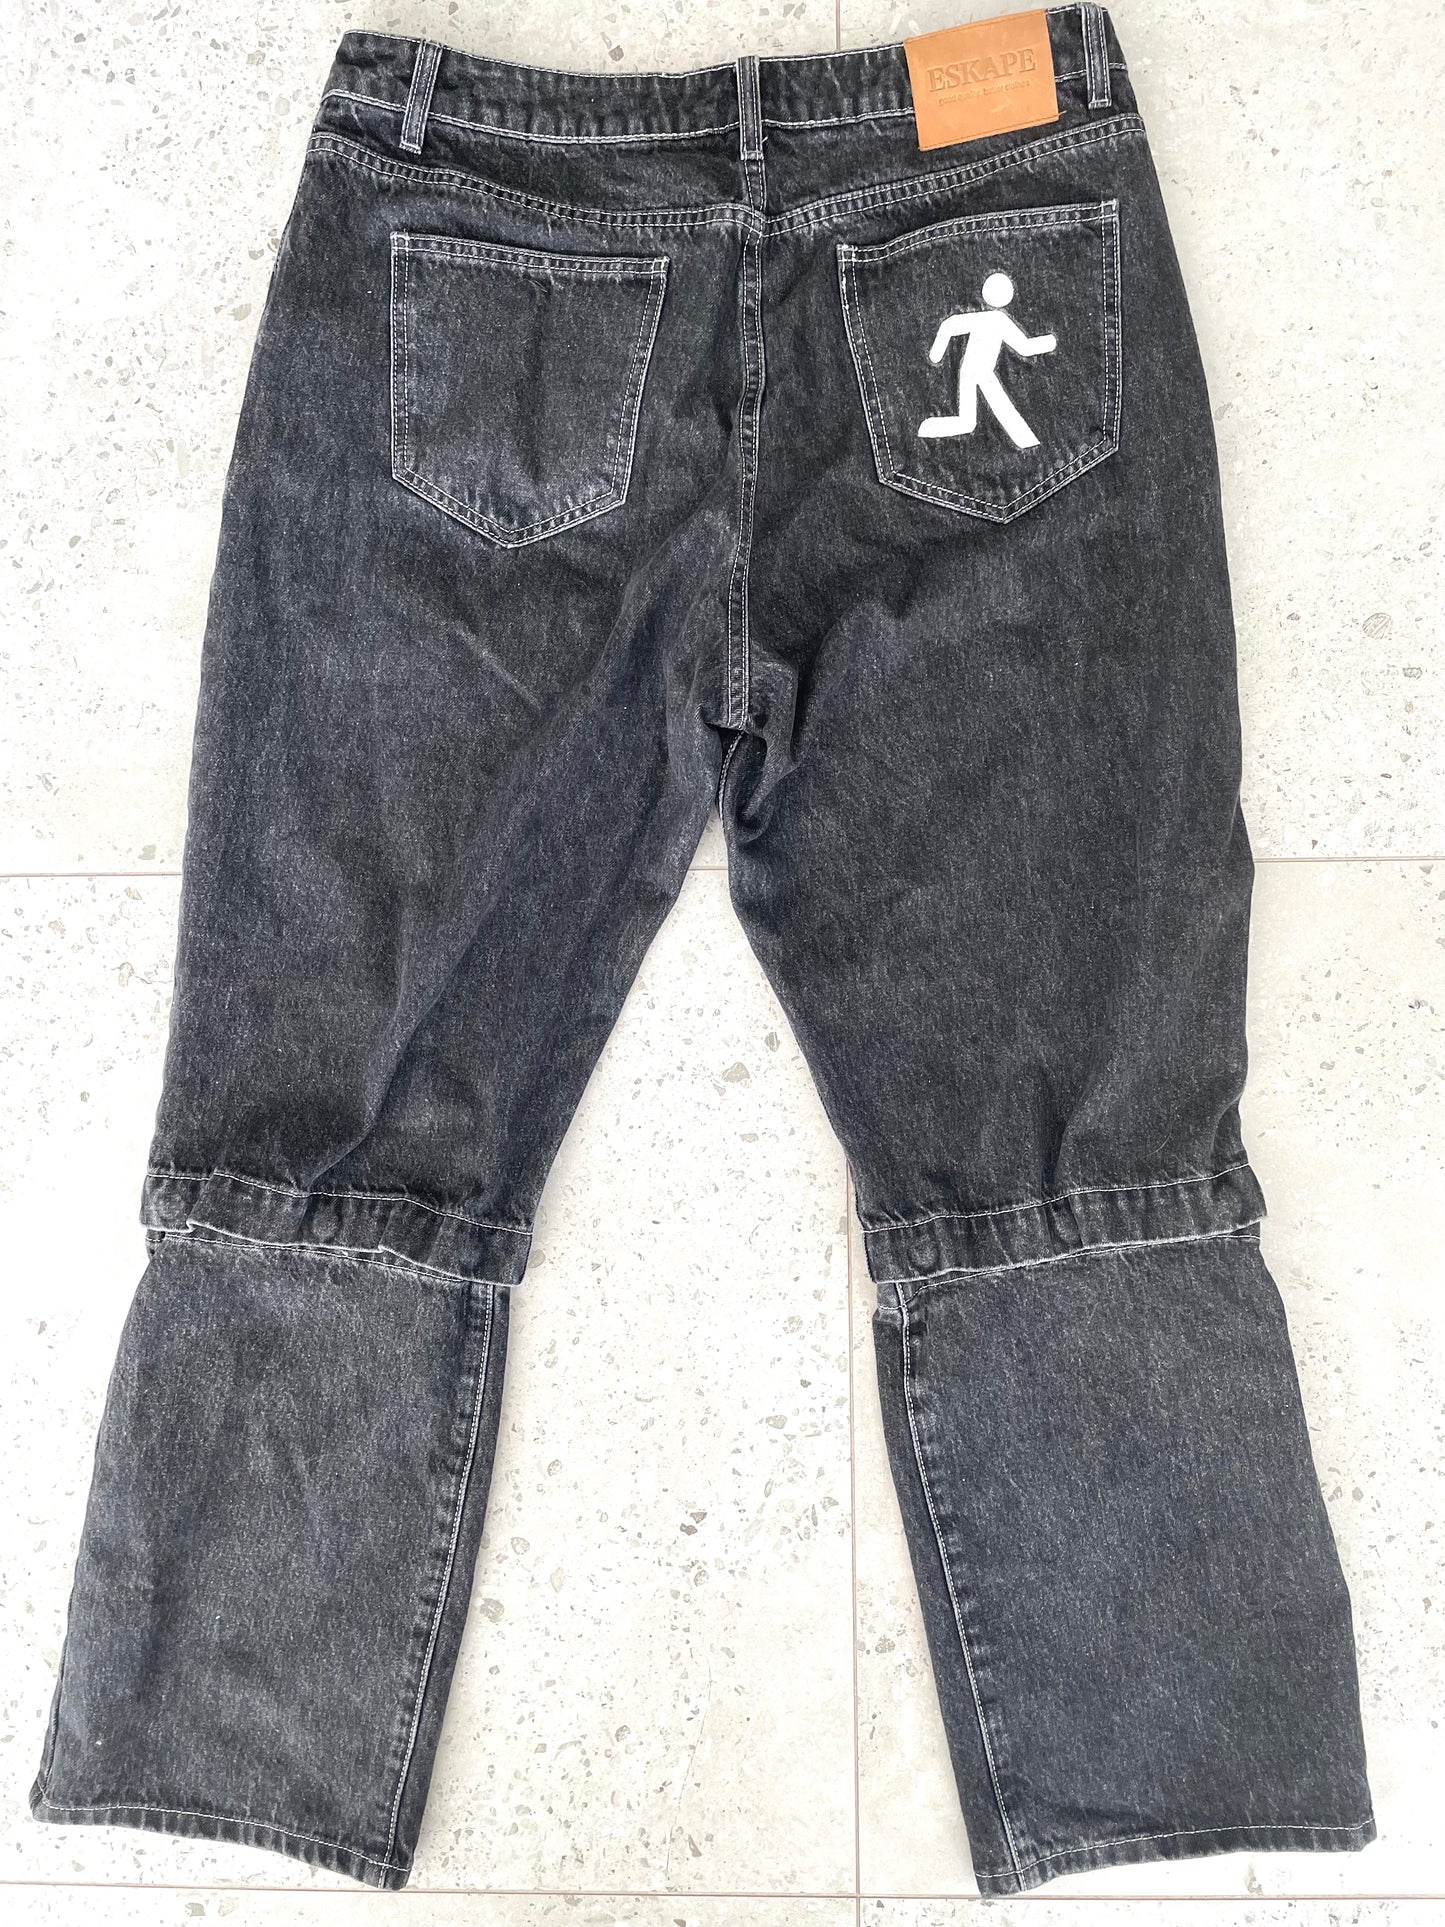 Modular Jeans/Jorts